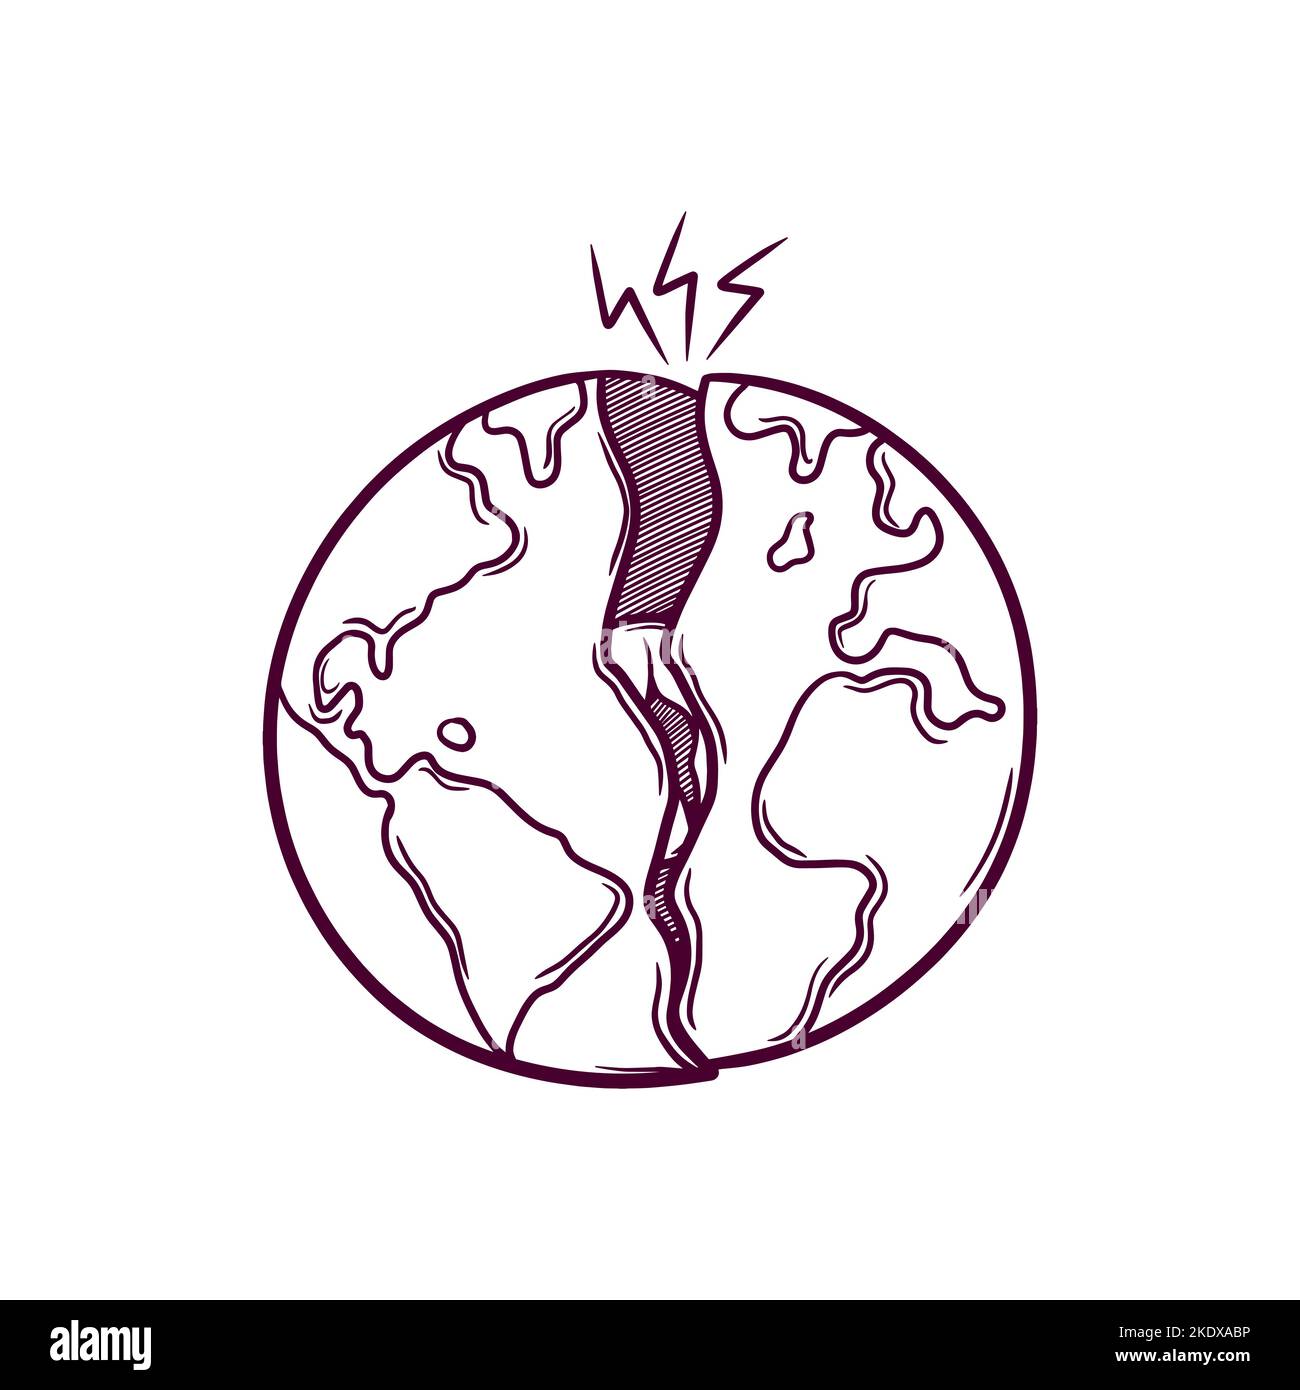 broken earth hand drawn doodle illustration Stock Vector